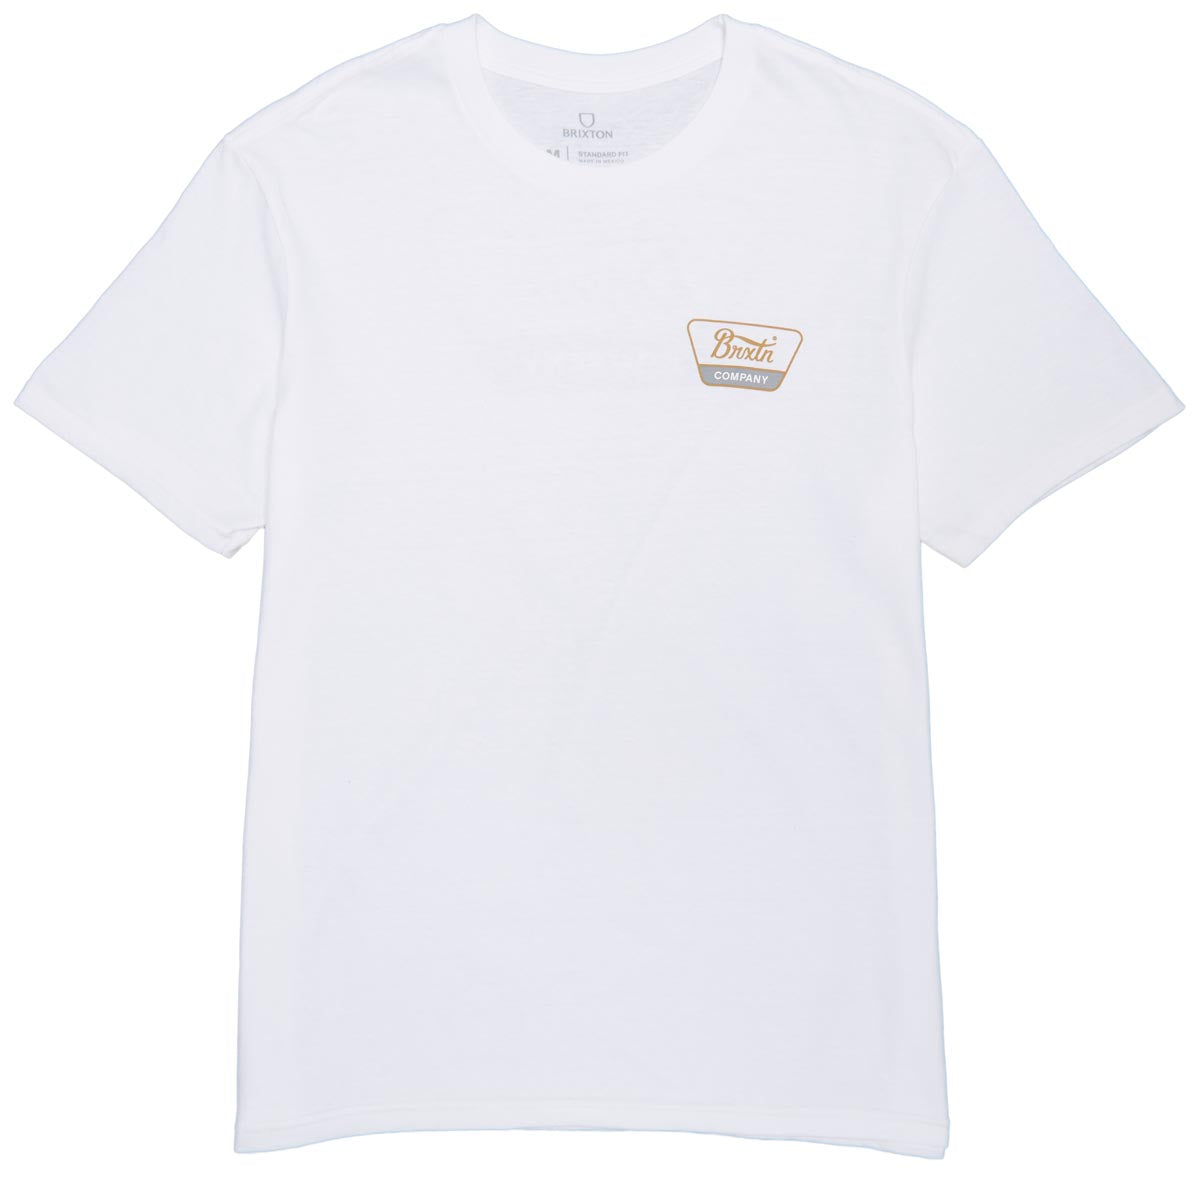 Brixton Linwood T-Shirt - White/Brass/Smoke image 2